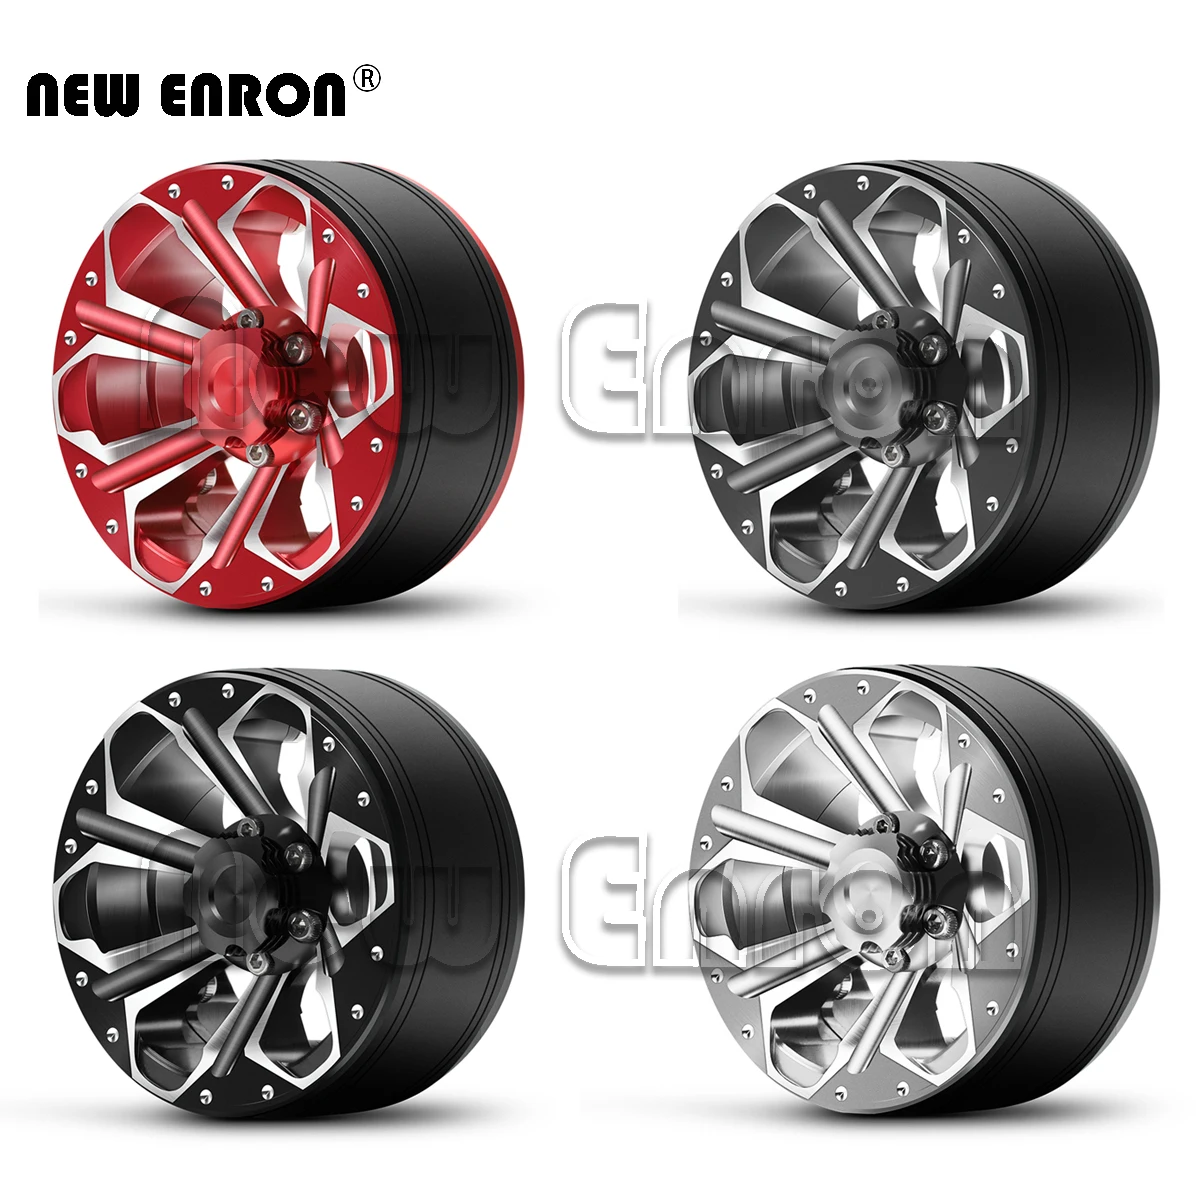 

NEW ENRON 1.9" Hub Metal Beadlock Wheel Rims for 1/10 RC Crawler Car Jeep Wrangler Axial SCX10 Tamiya Traxxas TRX4 MST RC4WD